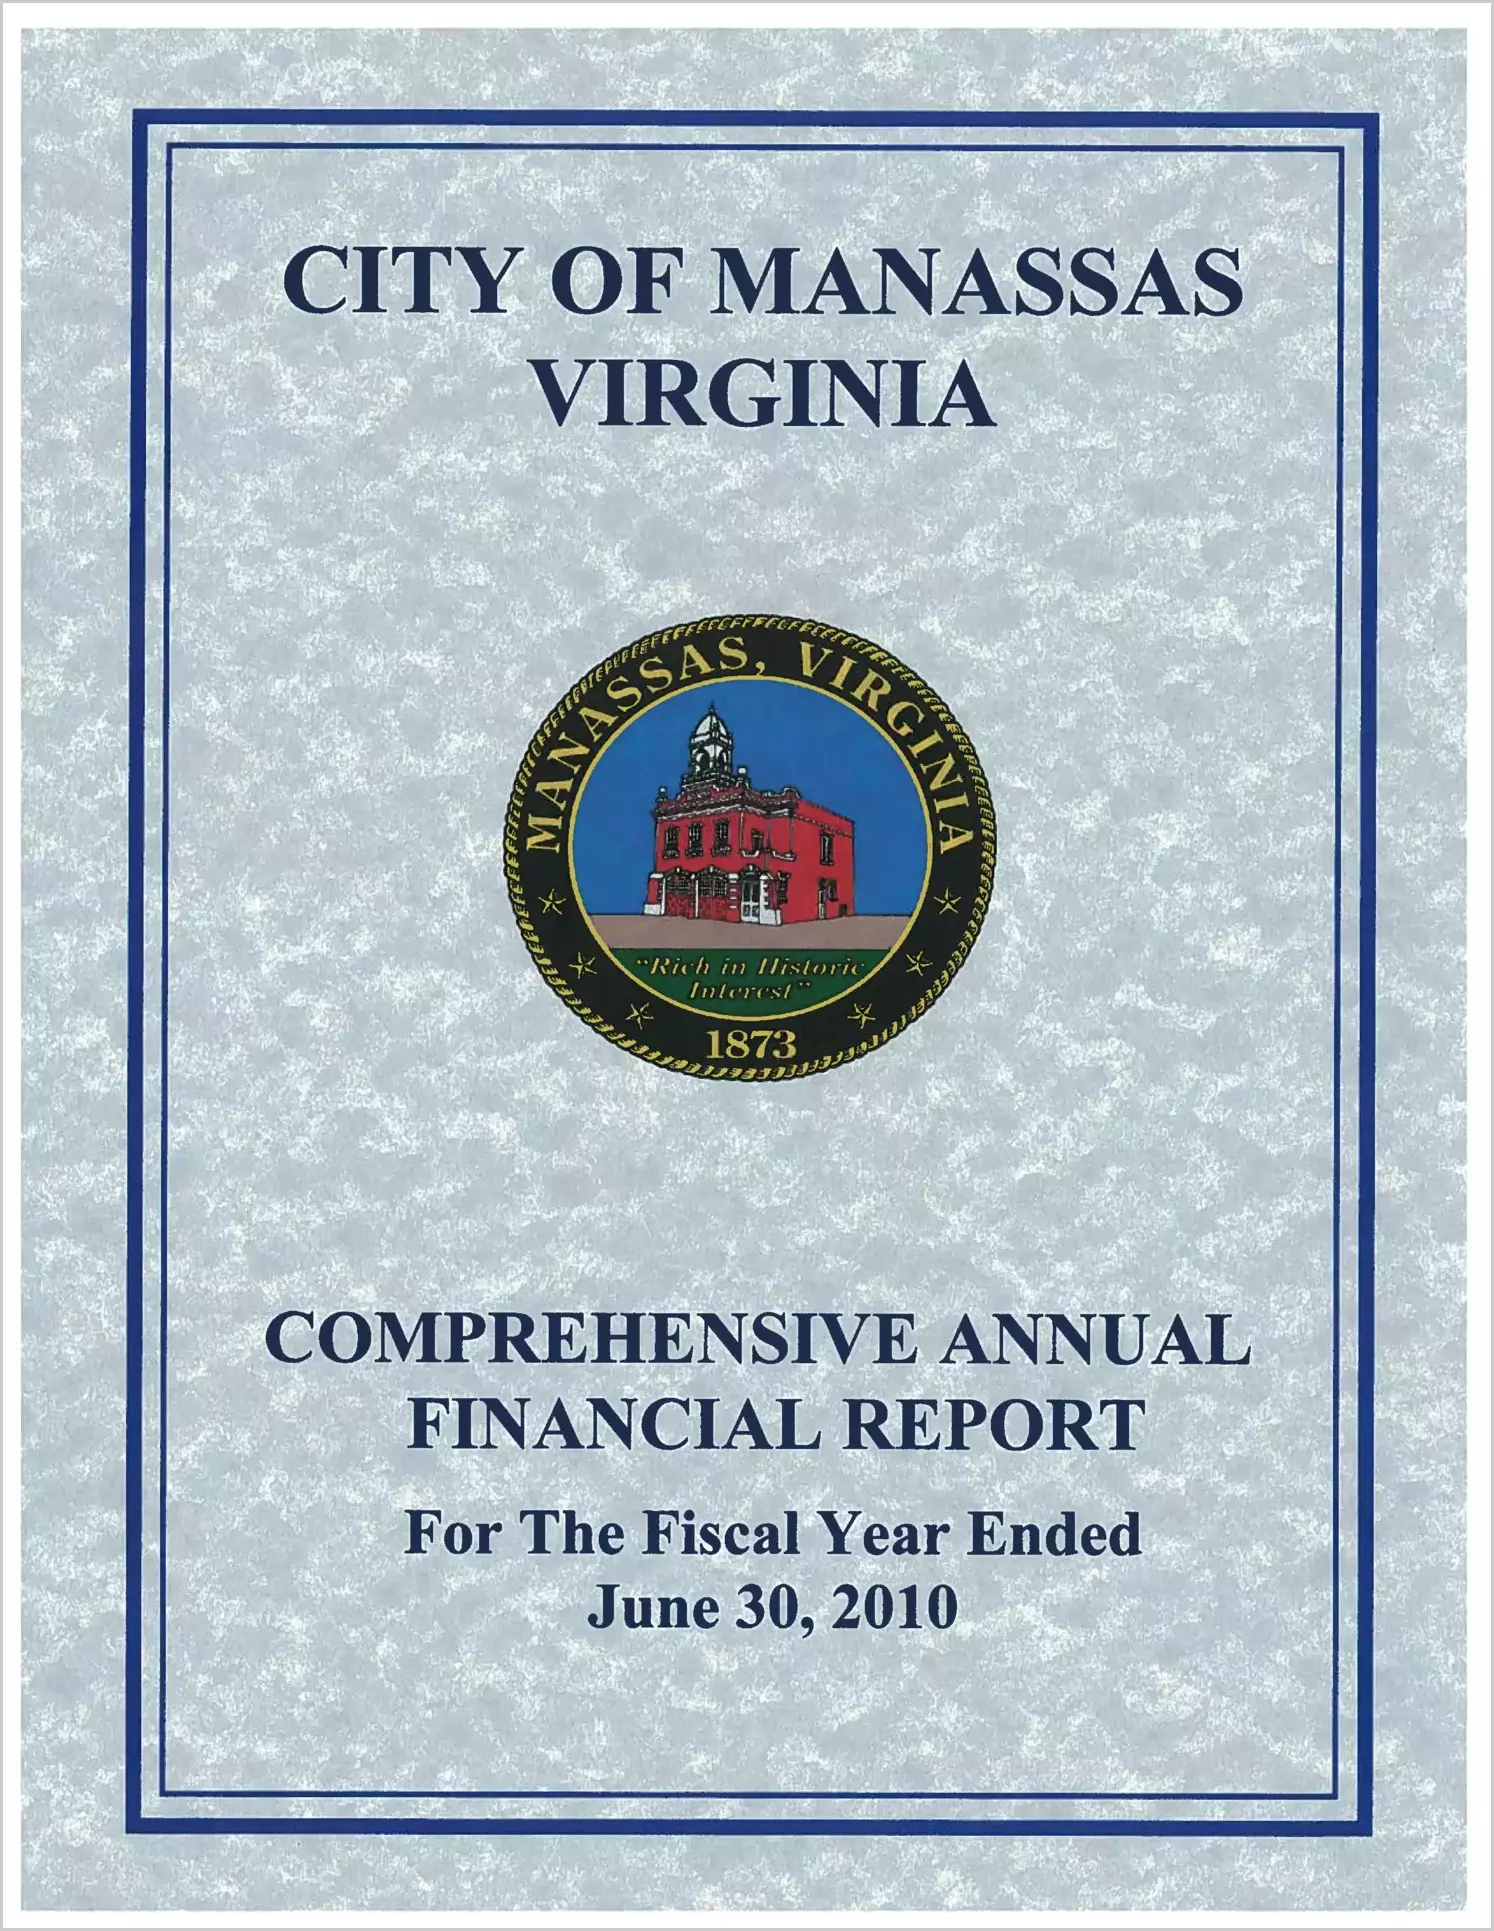 2010 Annual Financial Report for City of Manassas